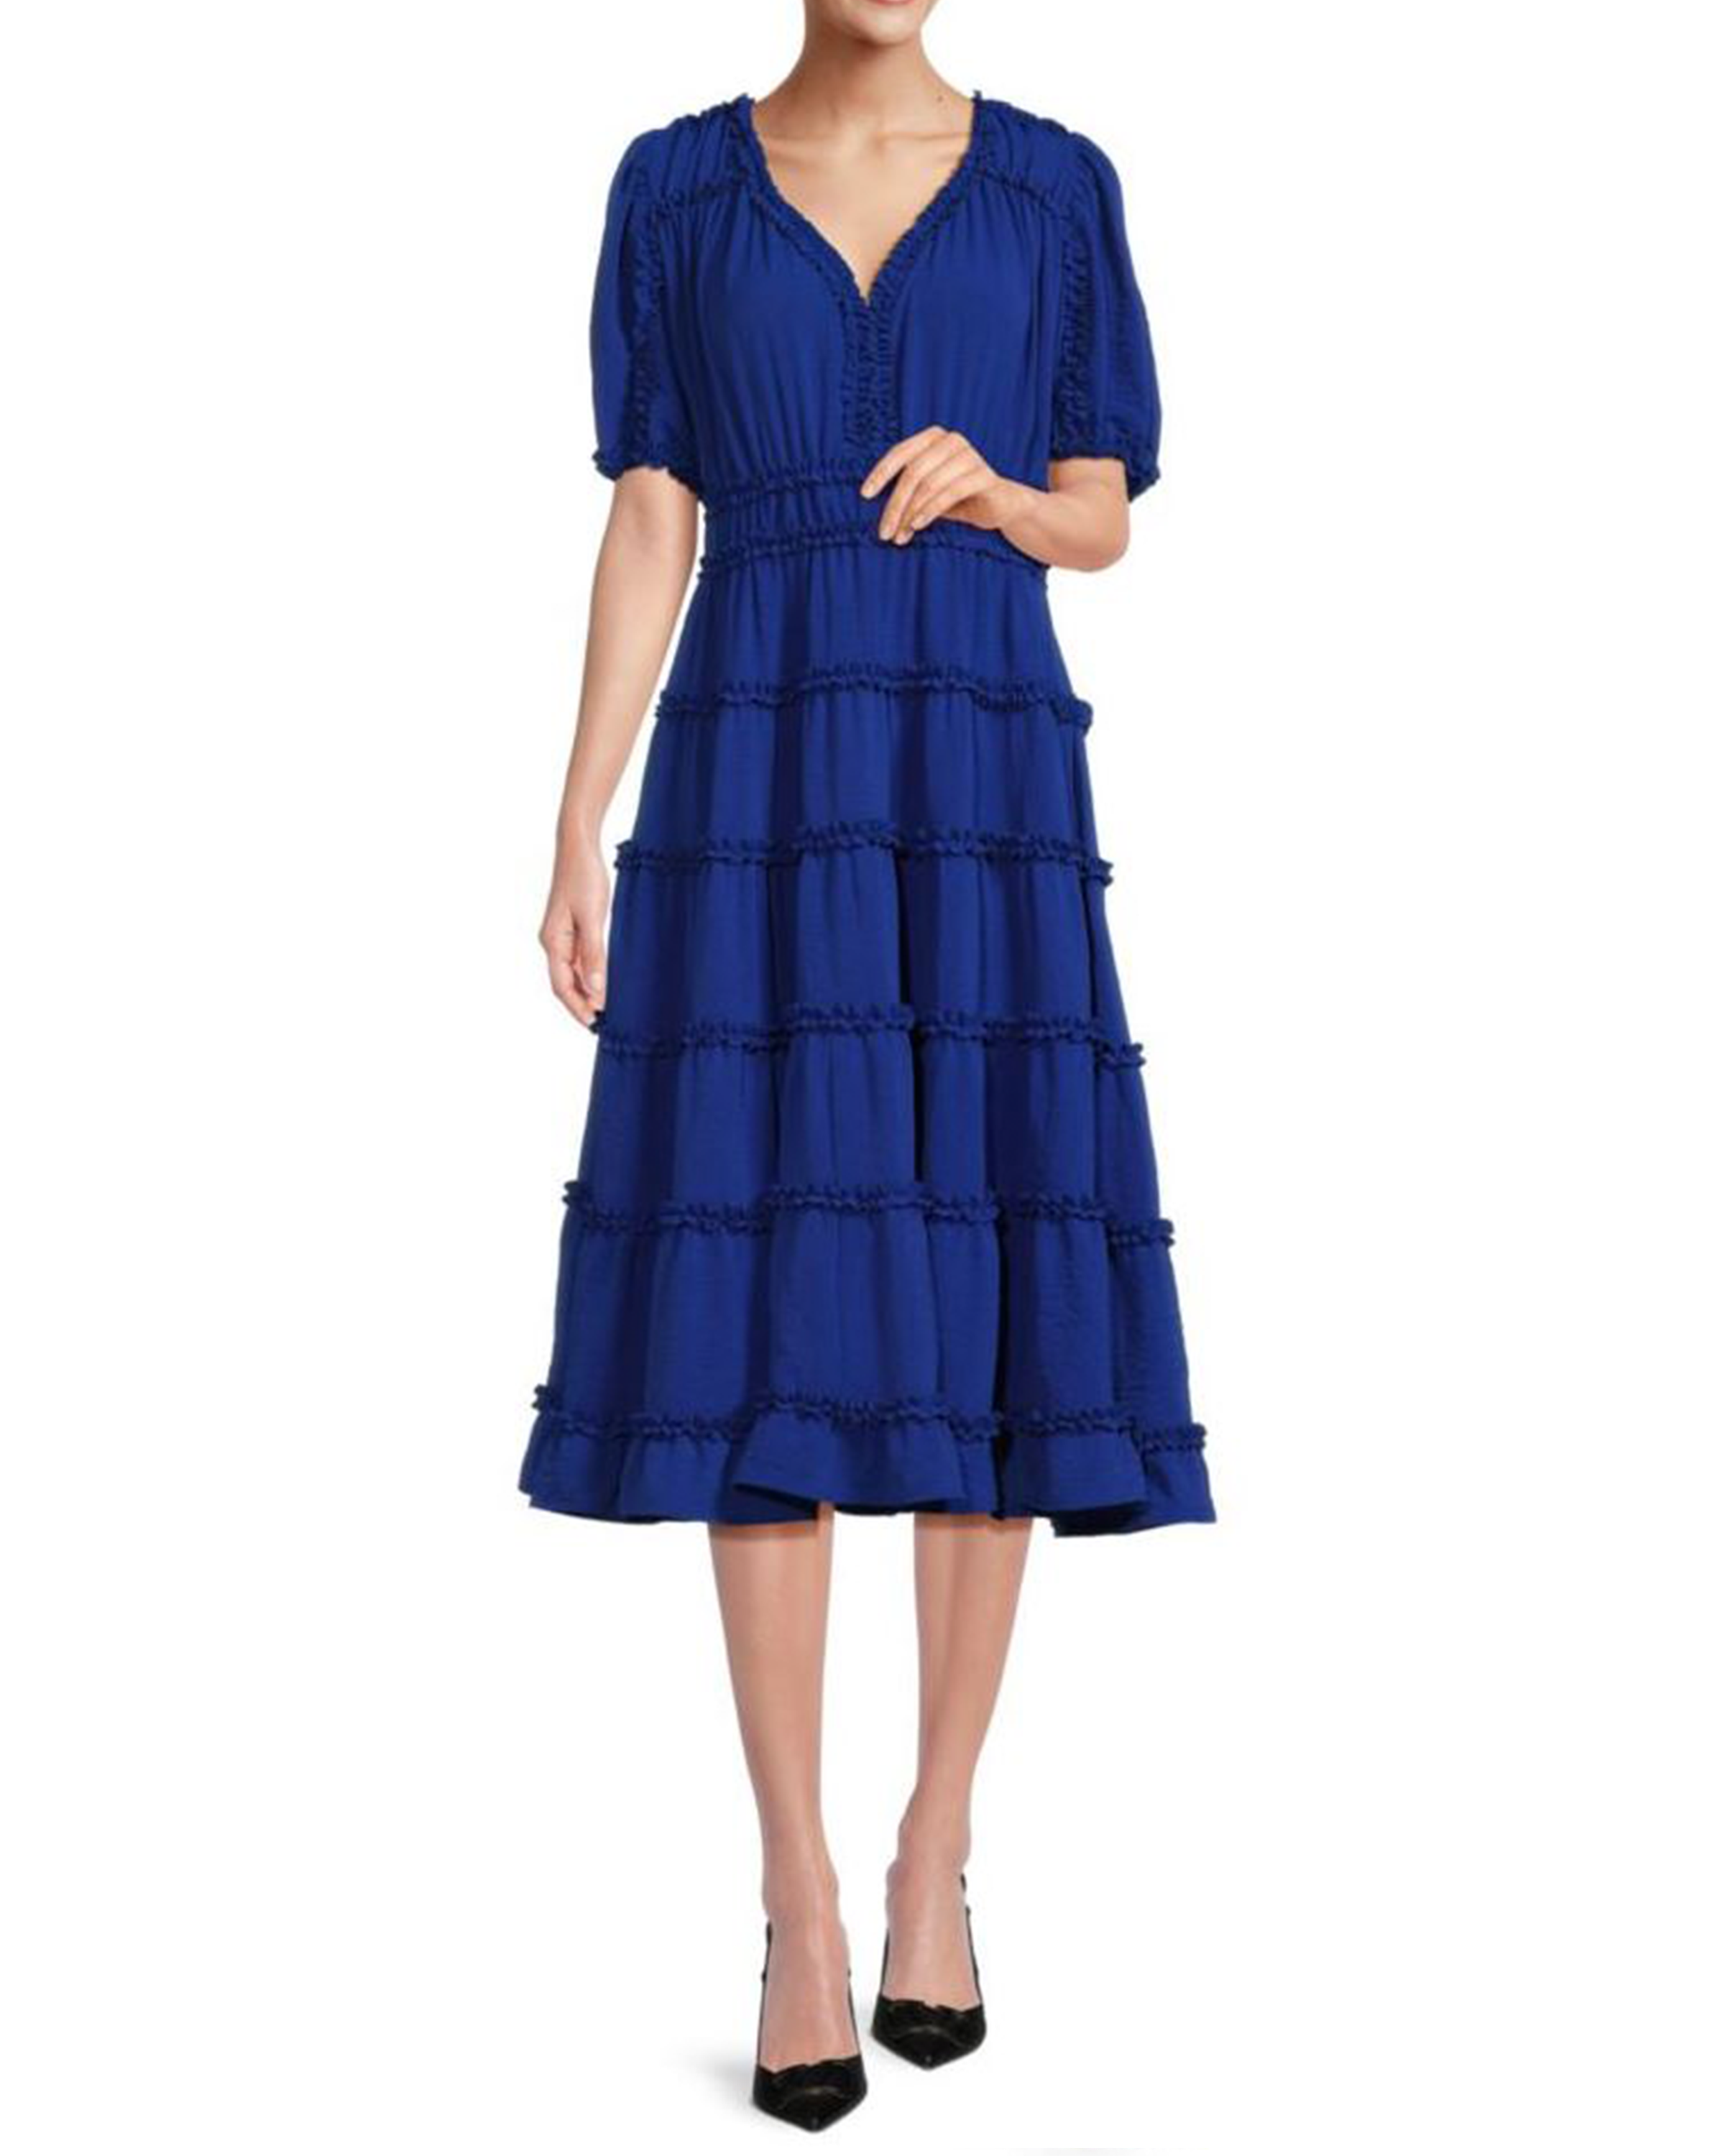 FOCUS by SHANI - Ruffle Trim Tiered Midi Dress